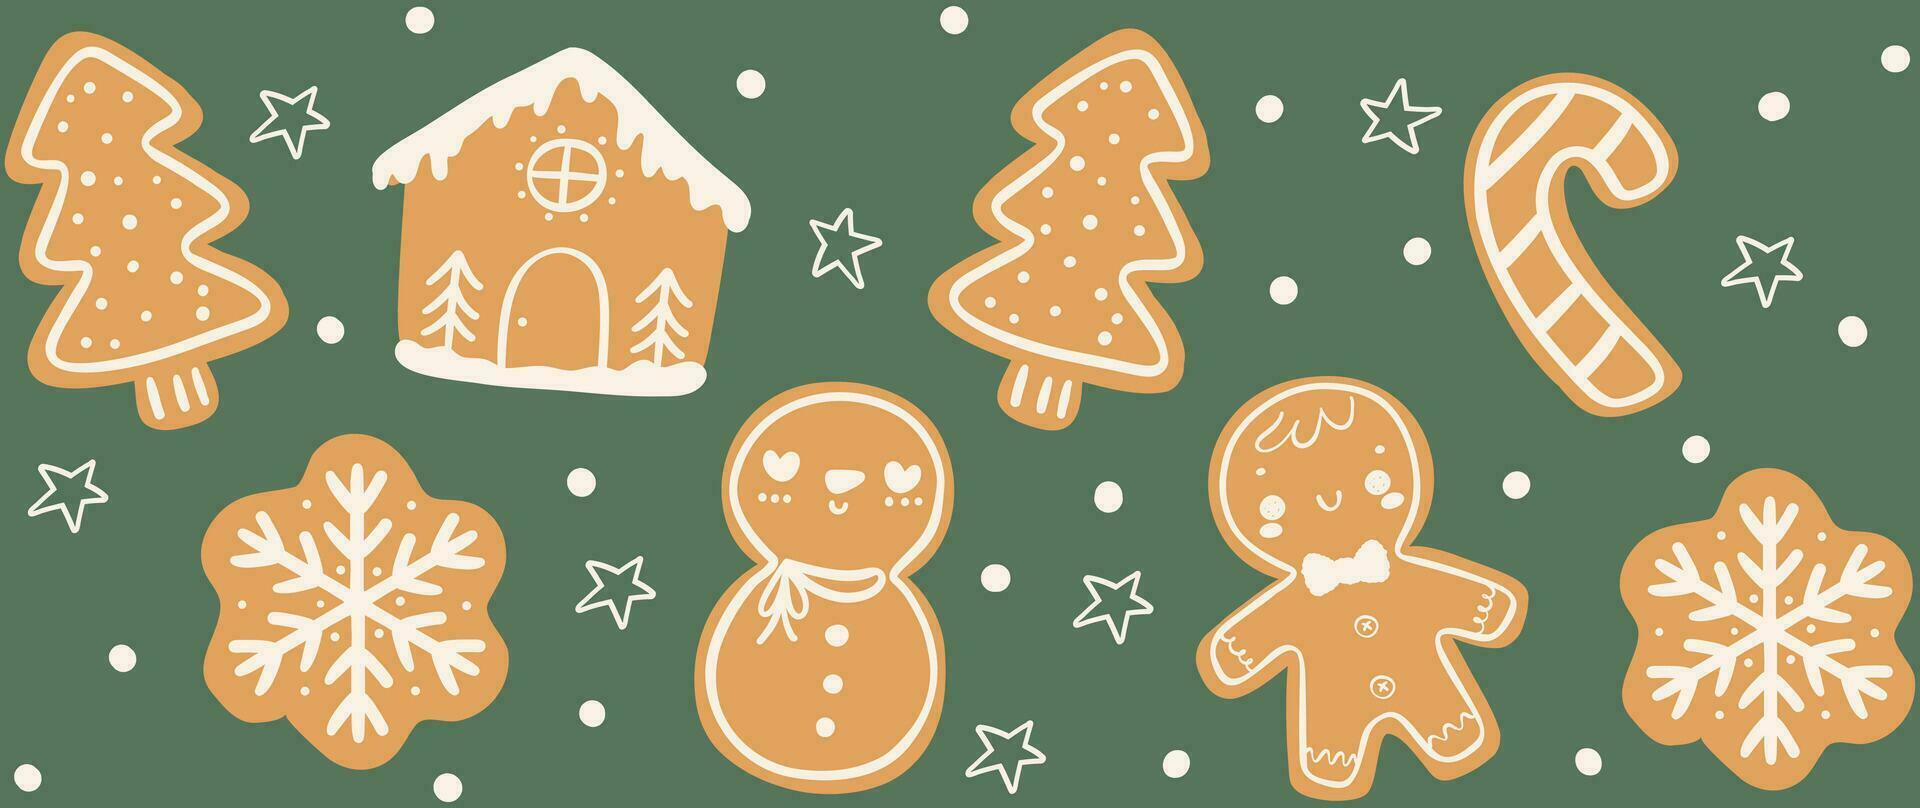 linda Navidad vaso lata envolver pan de jengibre galletas modelo en capas imprimible para dieciséis onz libbey aislado en antecedentes. vector